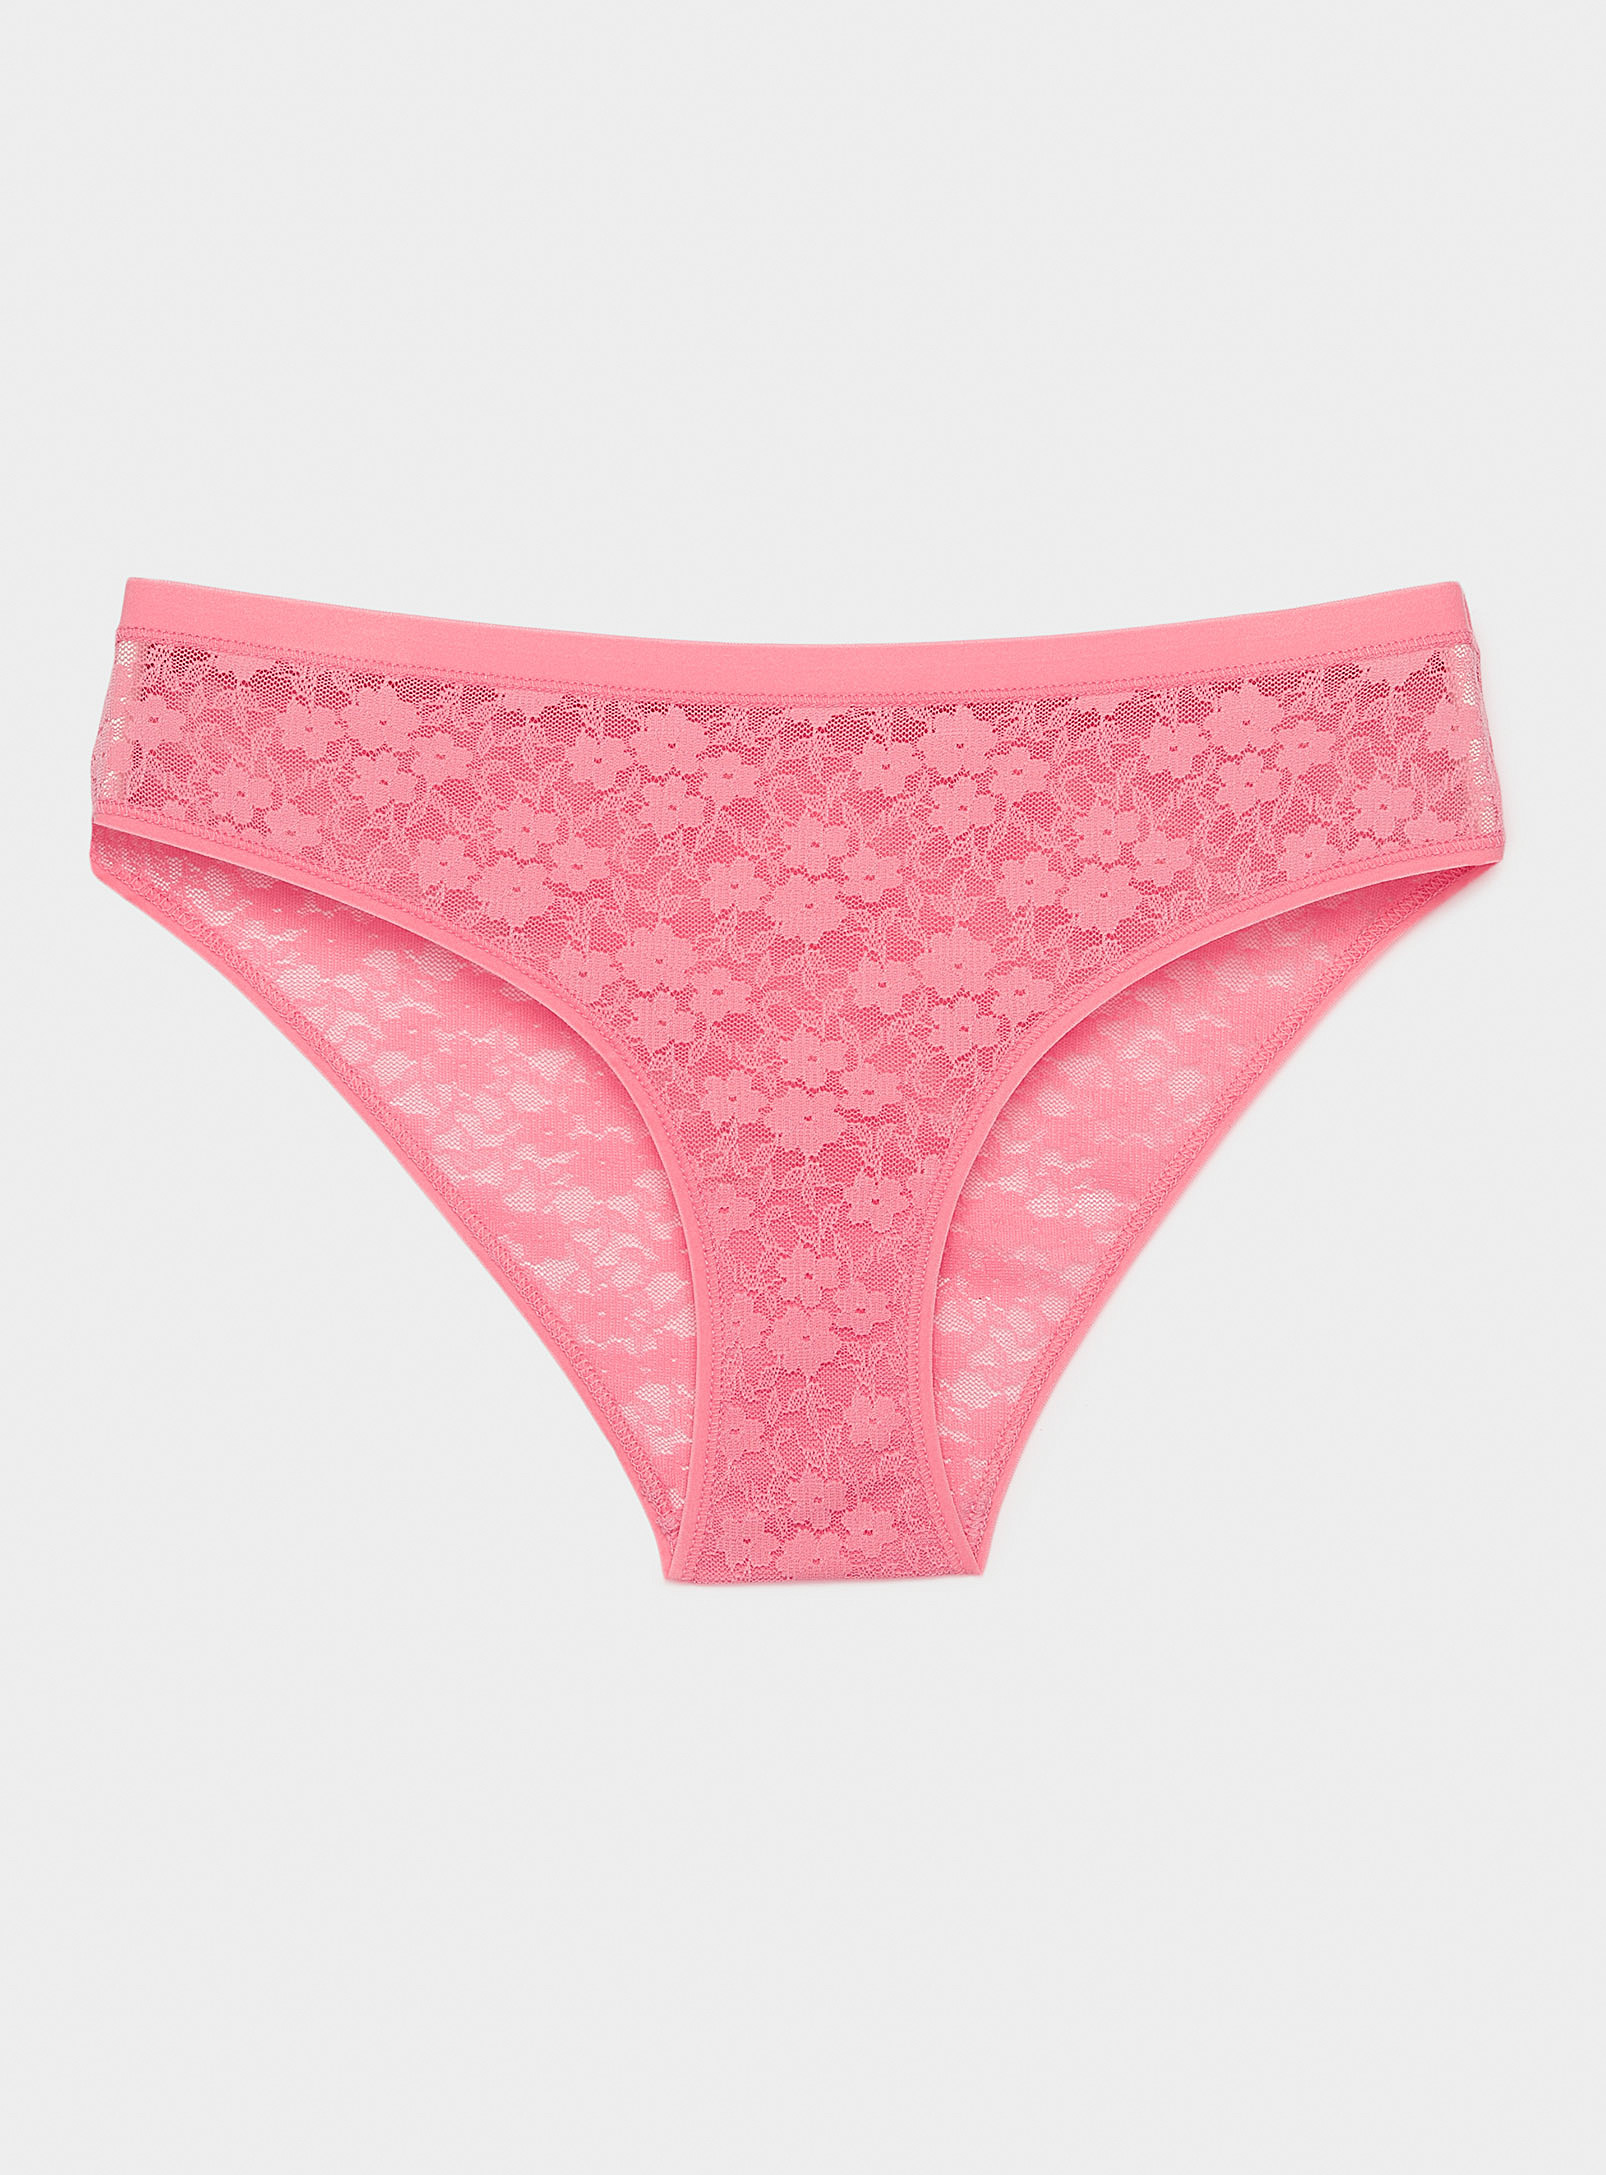 Miiyu Small Flowers Lace Bikini Panty In Pink